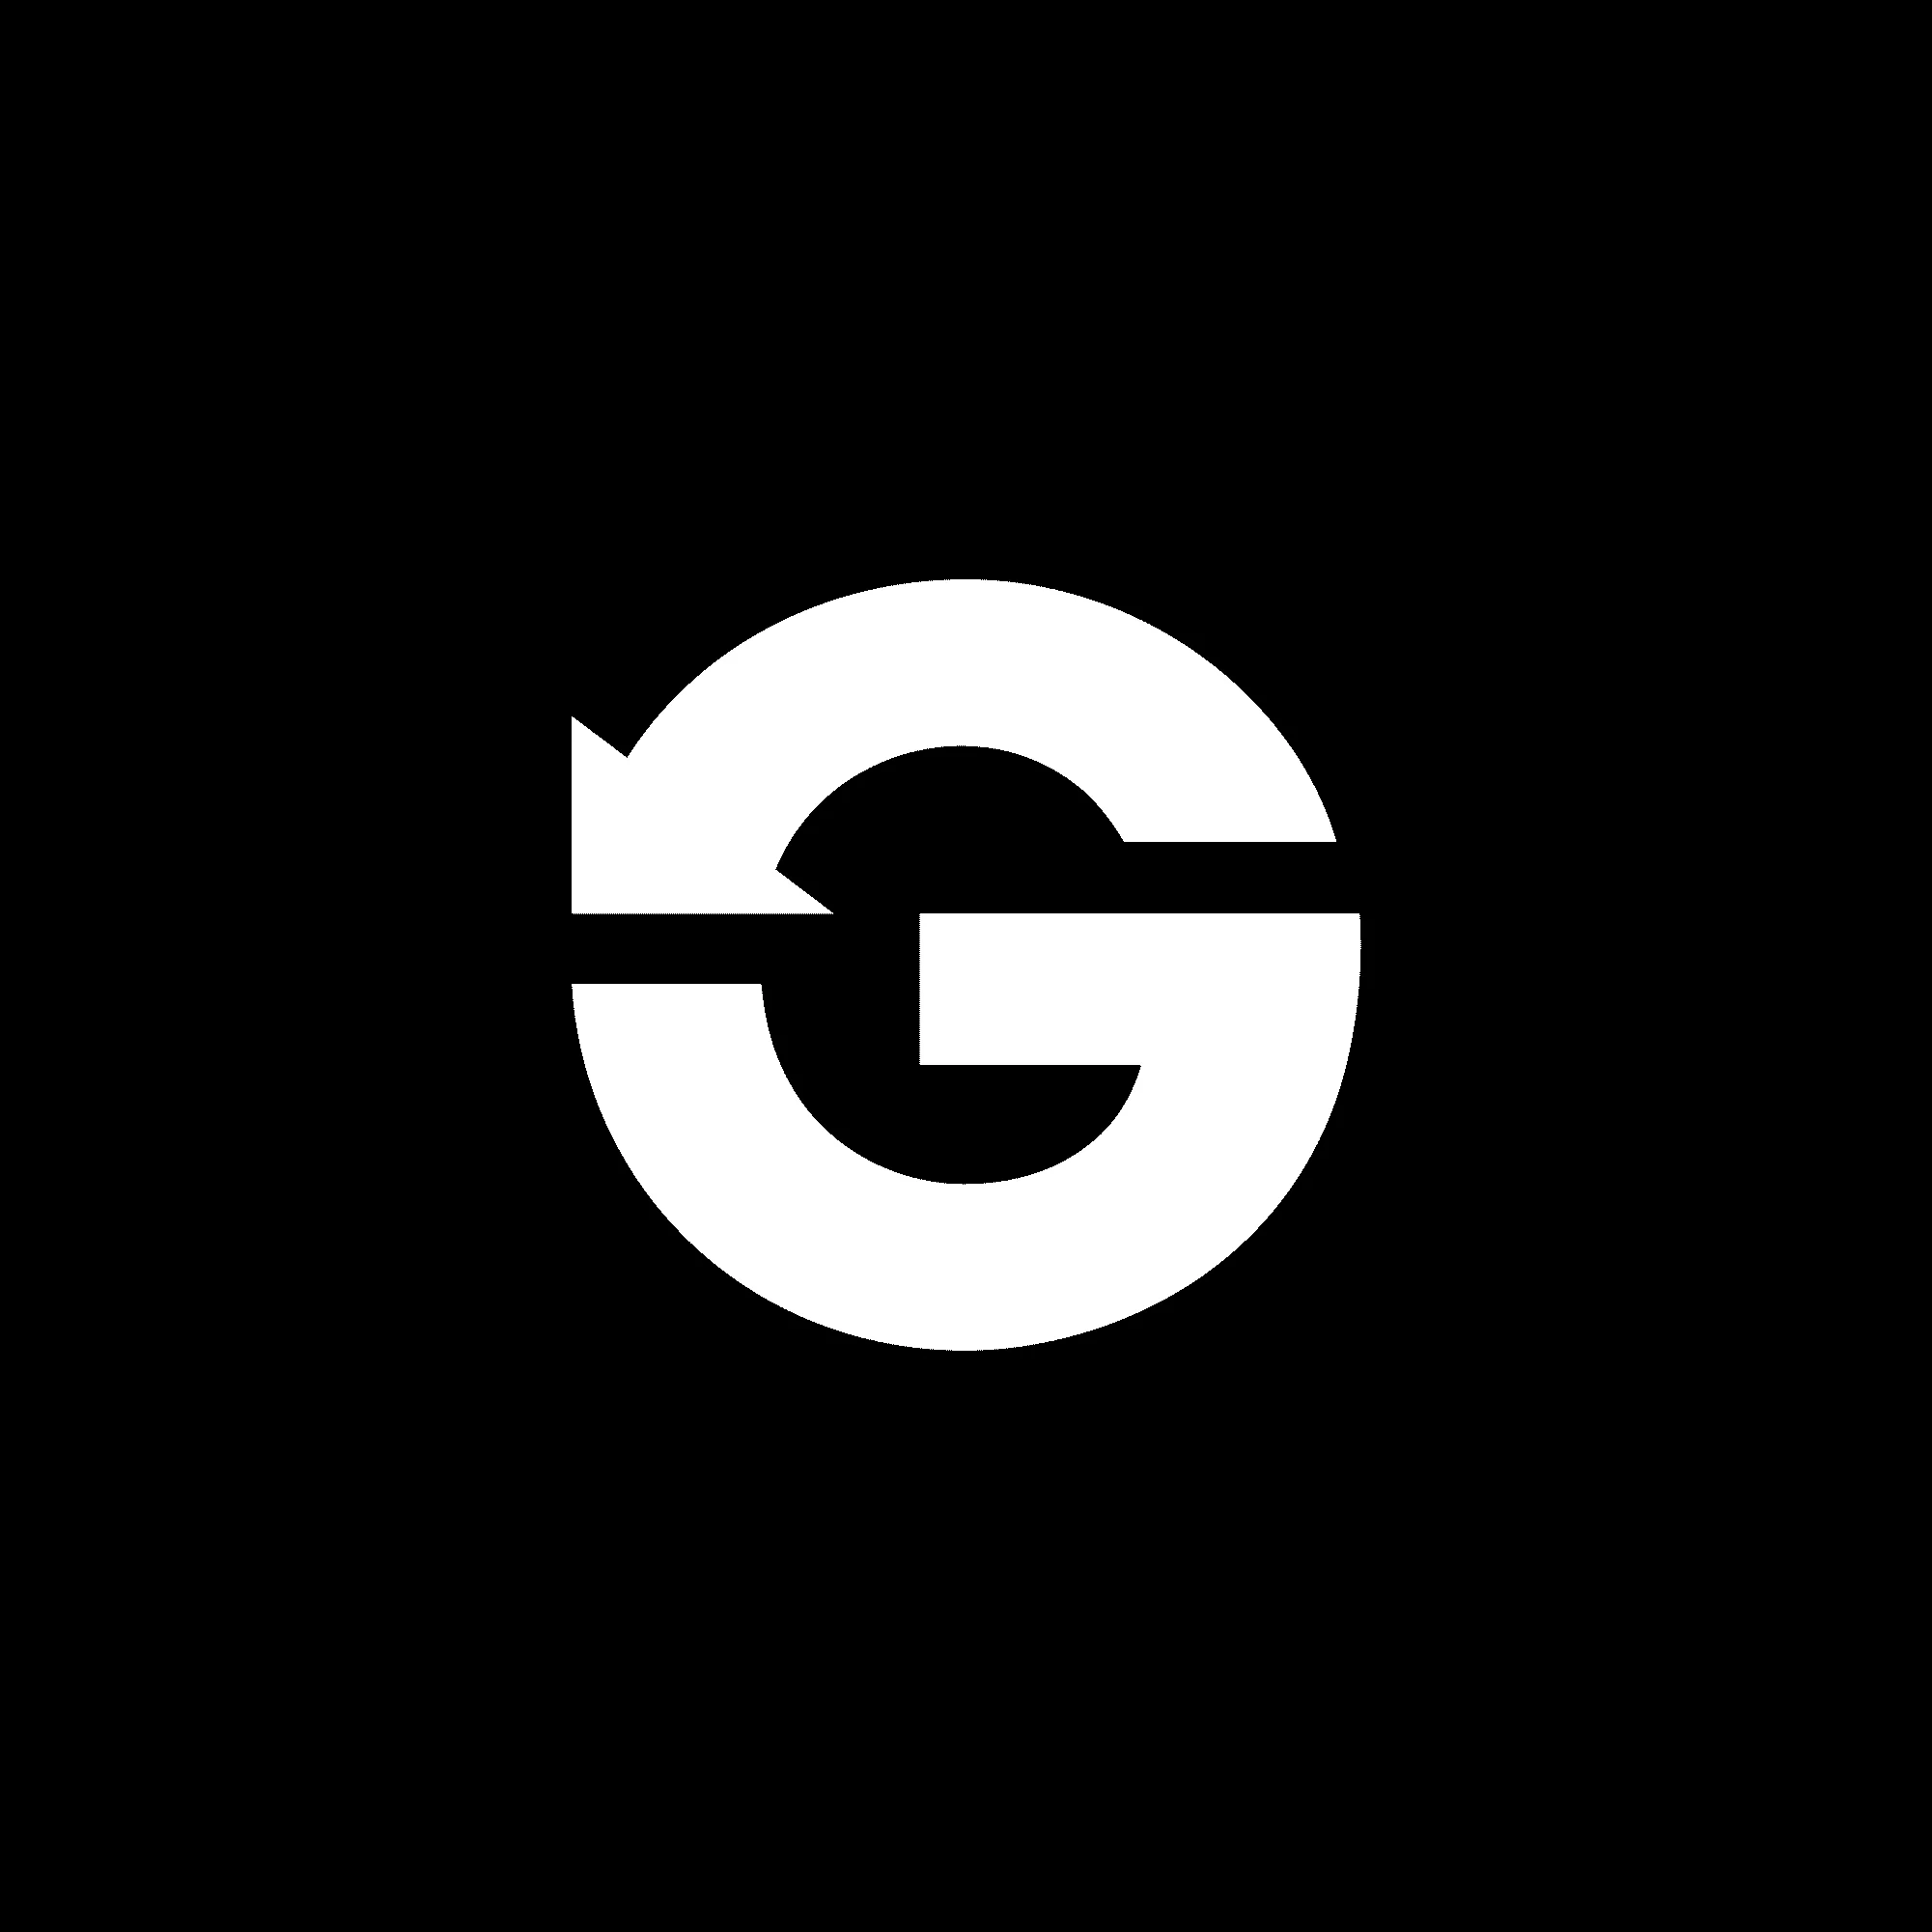 Branding logo design "G" with an arrow